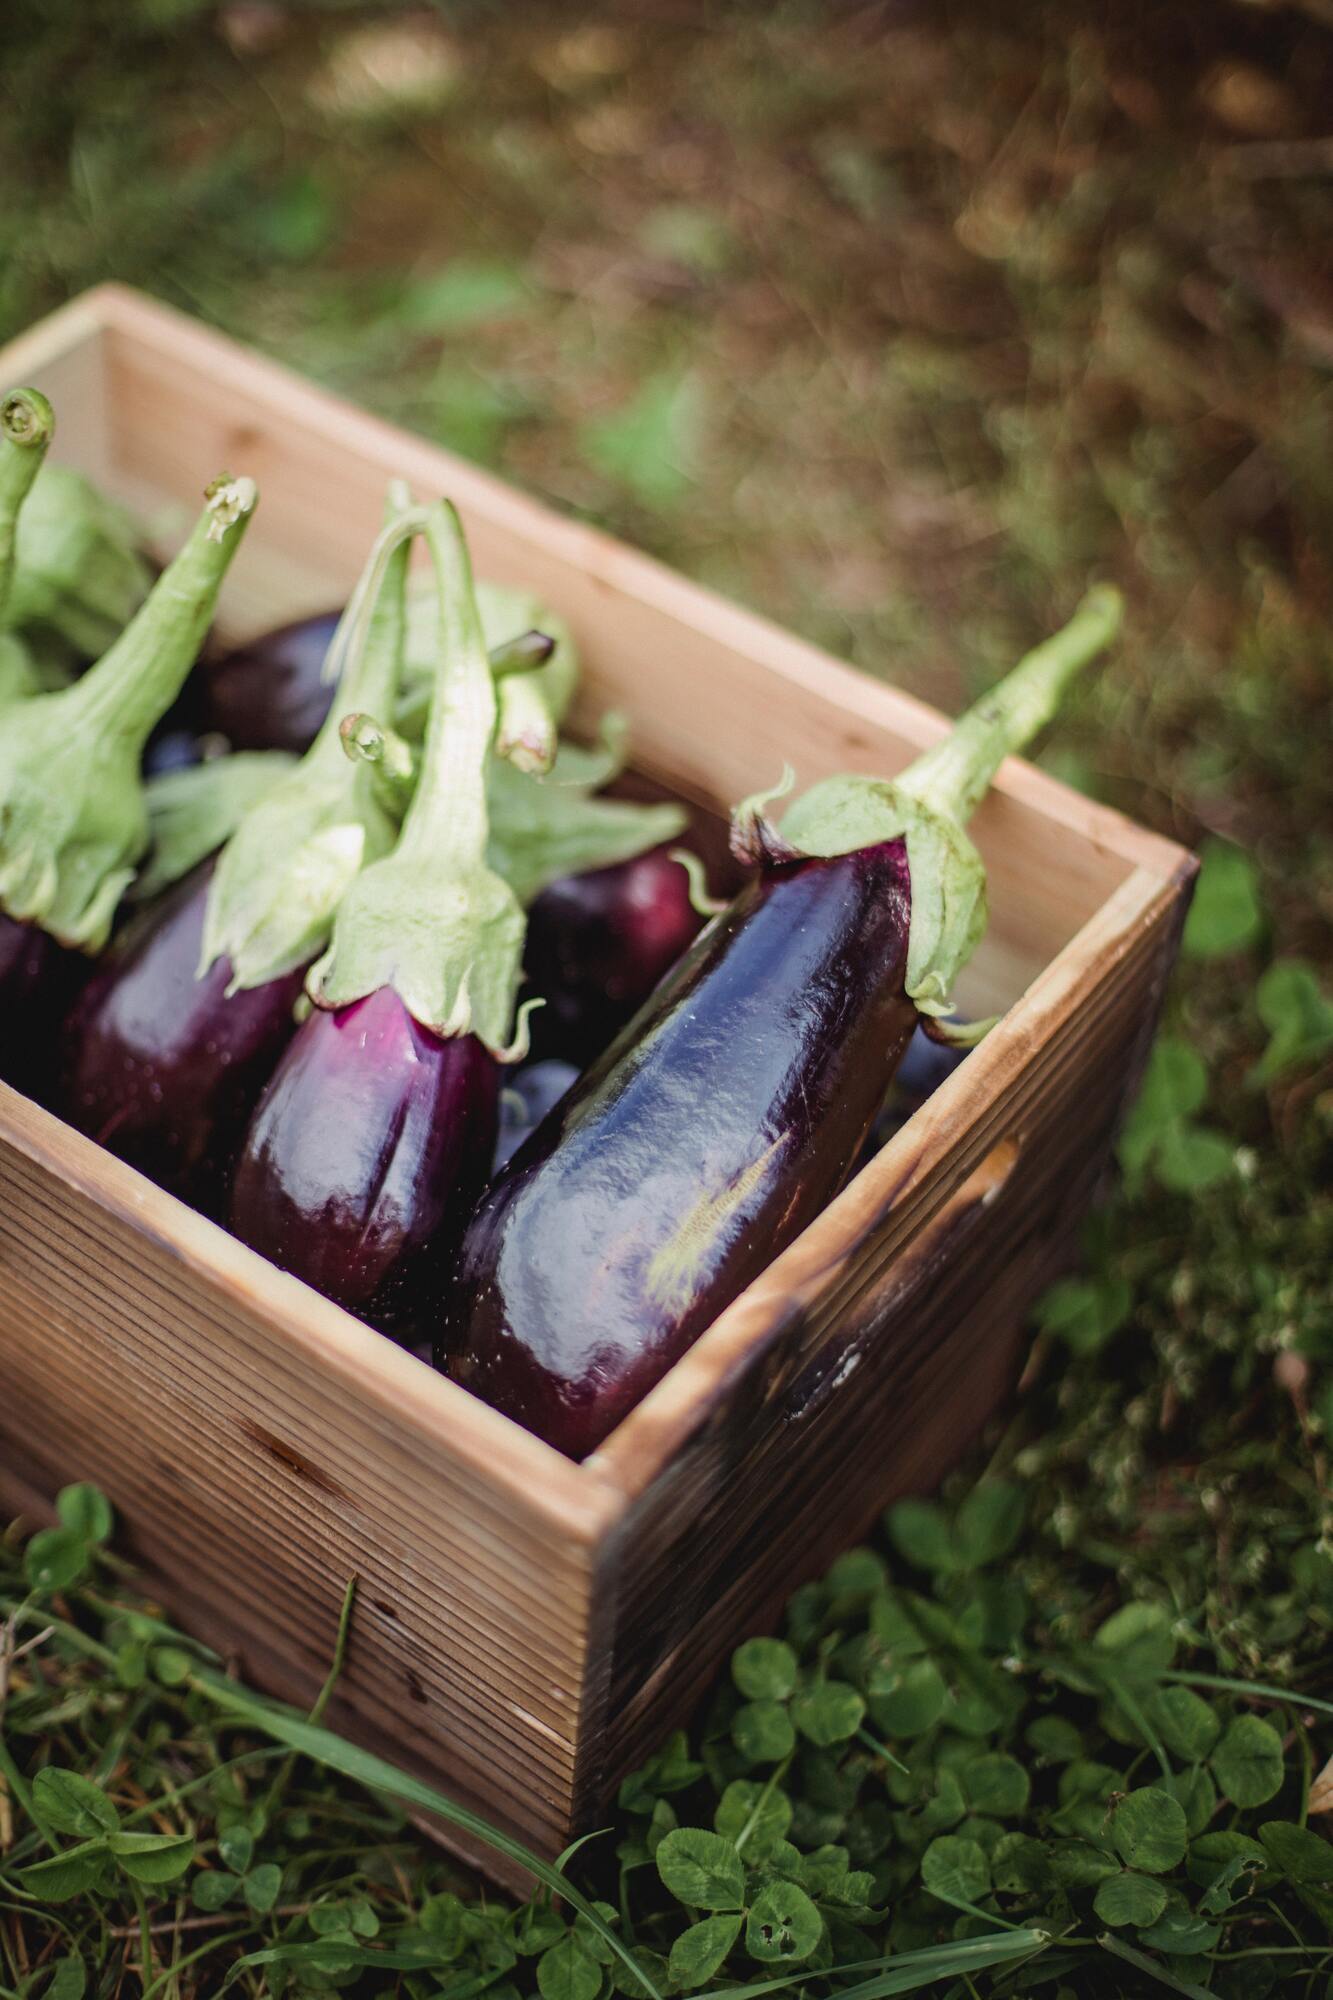 How to tastily preserve eggplants for winter: simple salad idea